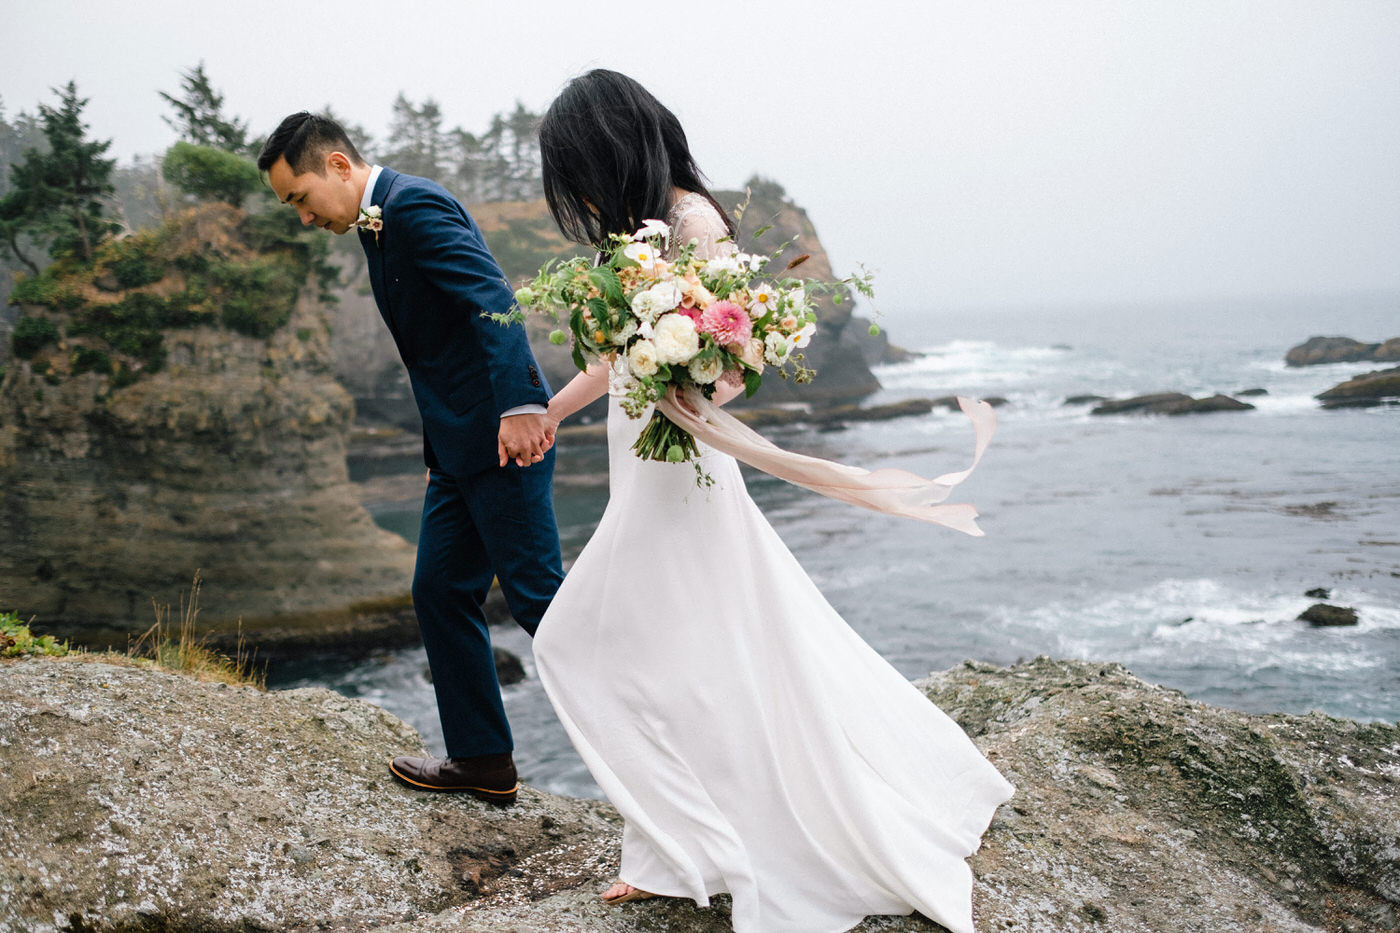 228-pacific-northwest-wedding-photography-by-ryan-flynn.jpg